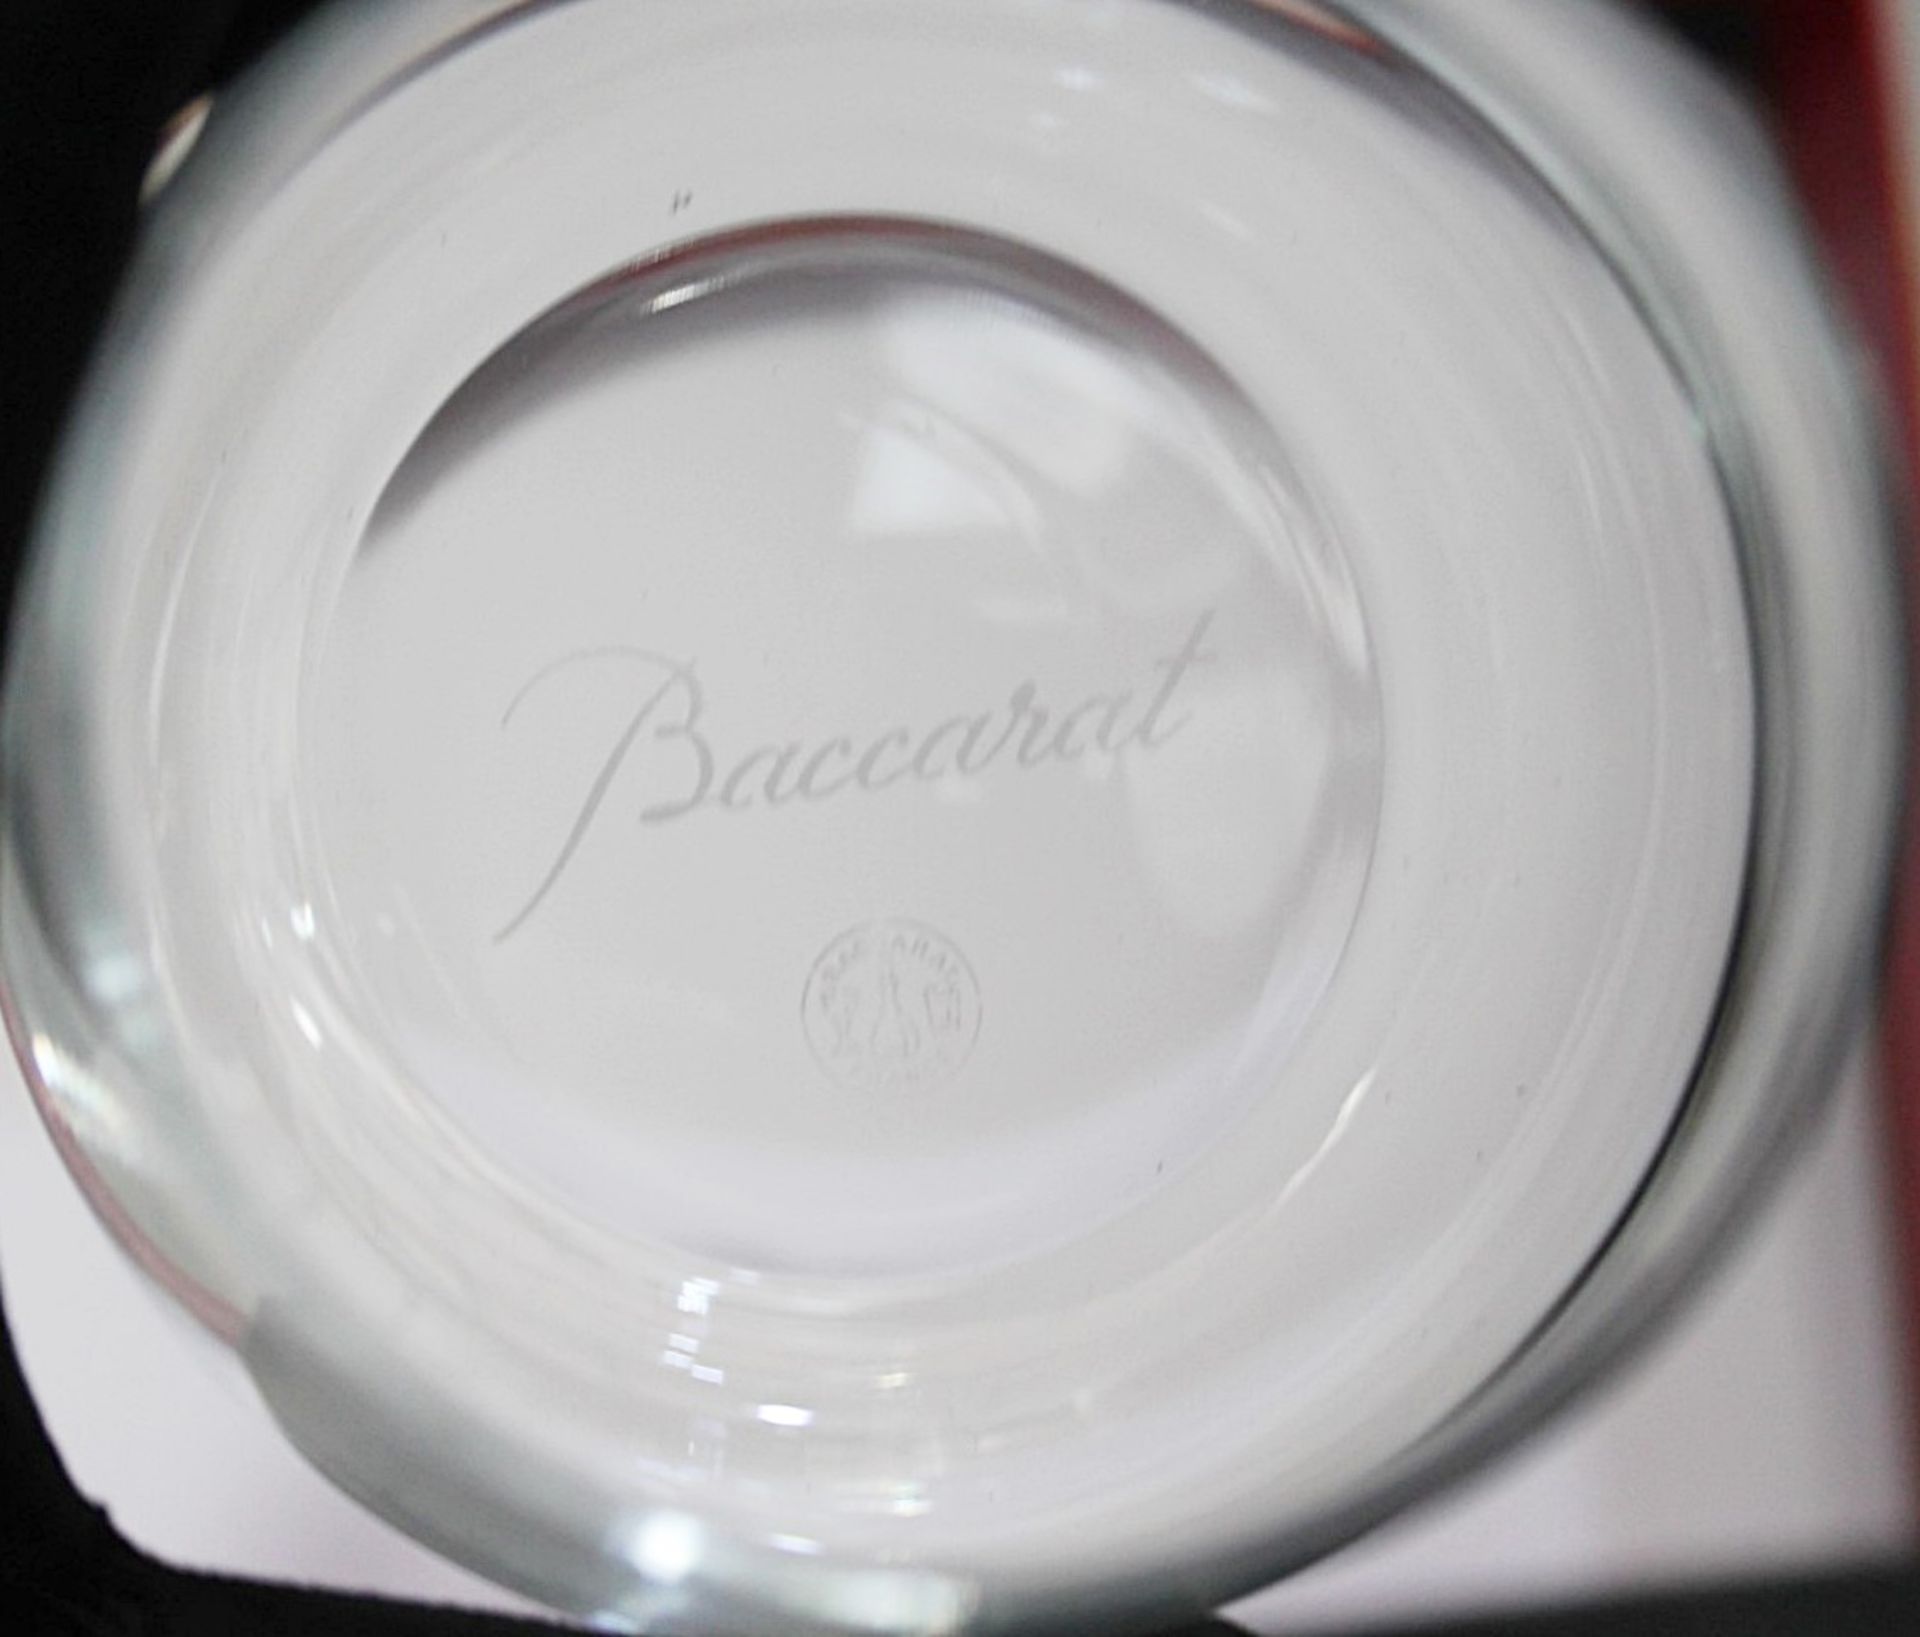 3 x Assorted BACCARAT 'Chateau Baccarat' Degustation Crystal Glasses - Original Total Value £180. - Image 3 of 7